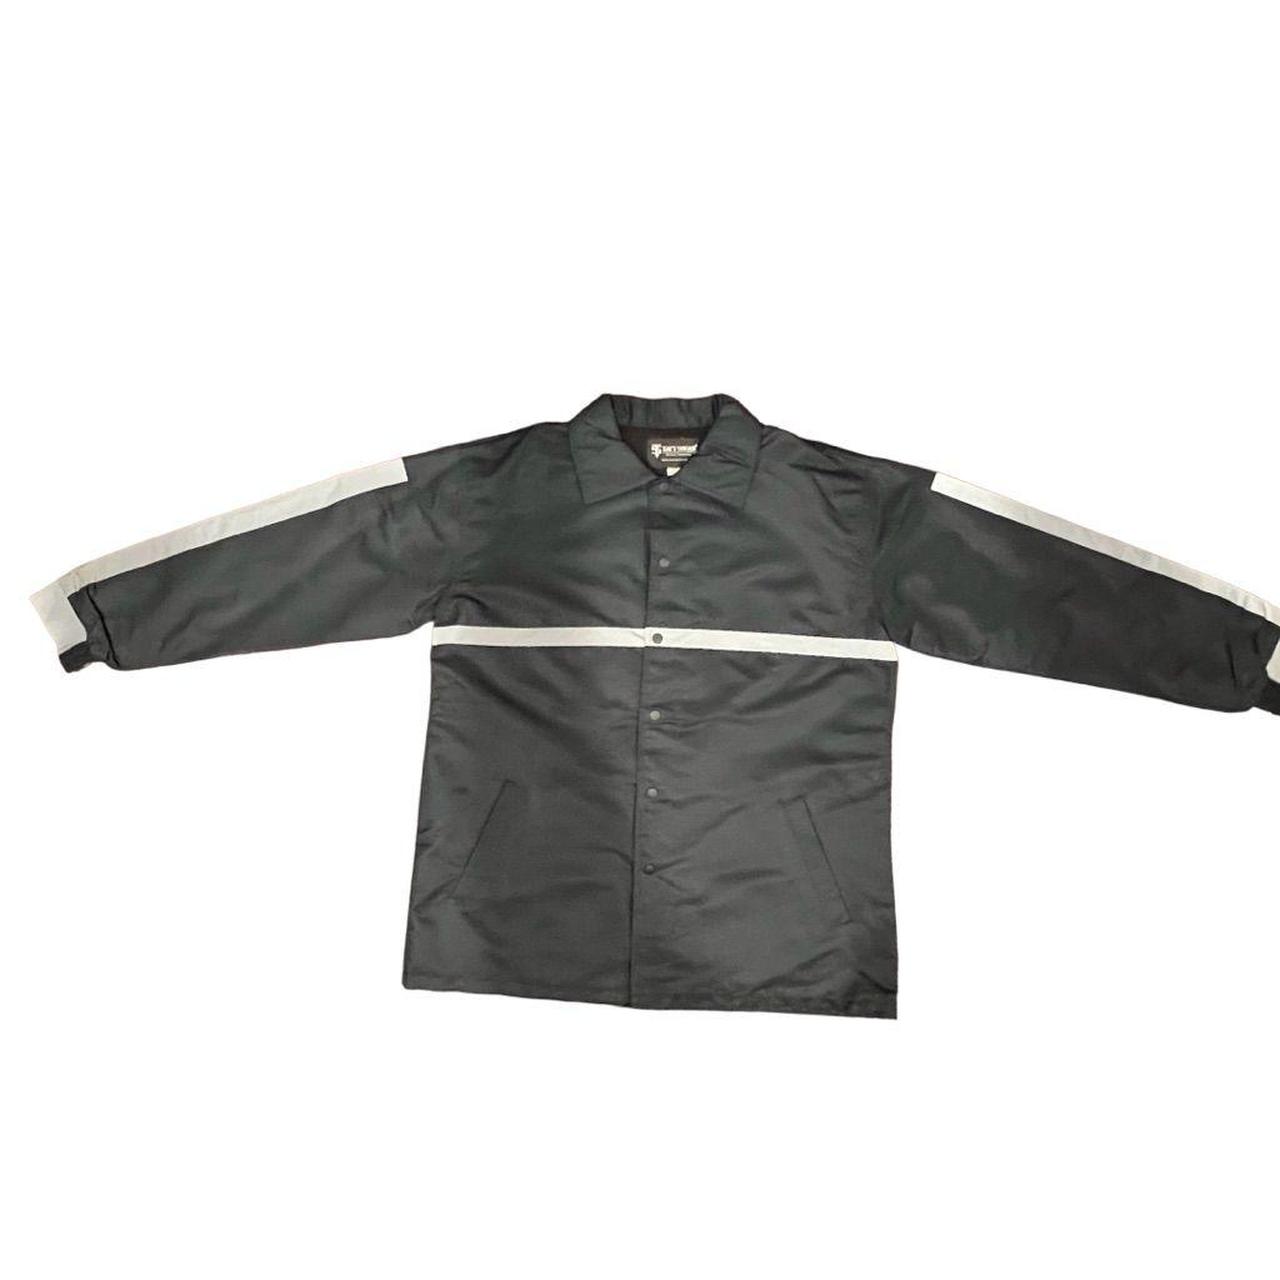 Tact Squad Jacket •Fabric: 100% nylon shell with... - Depop